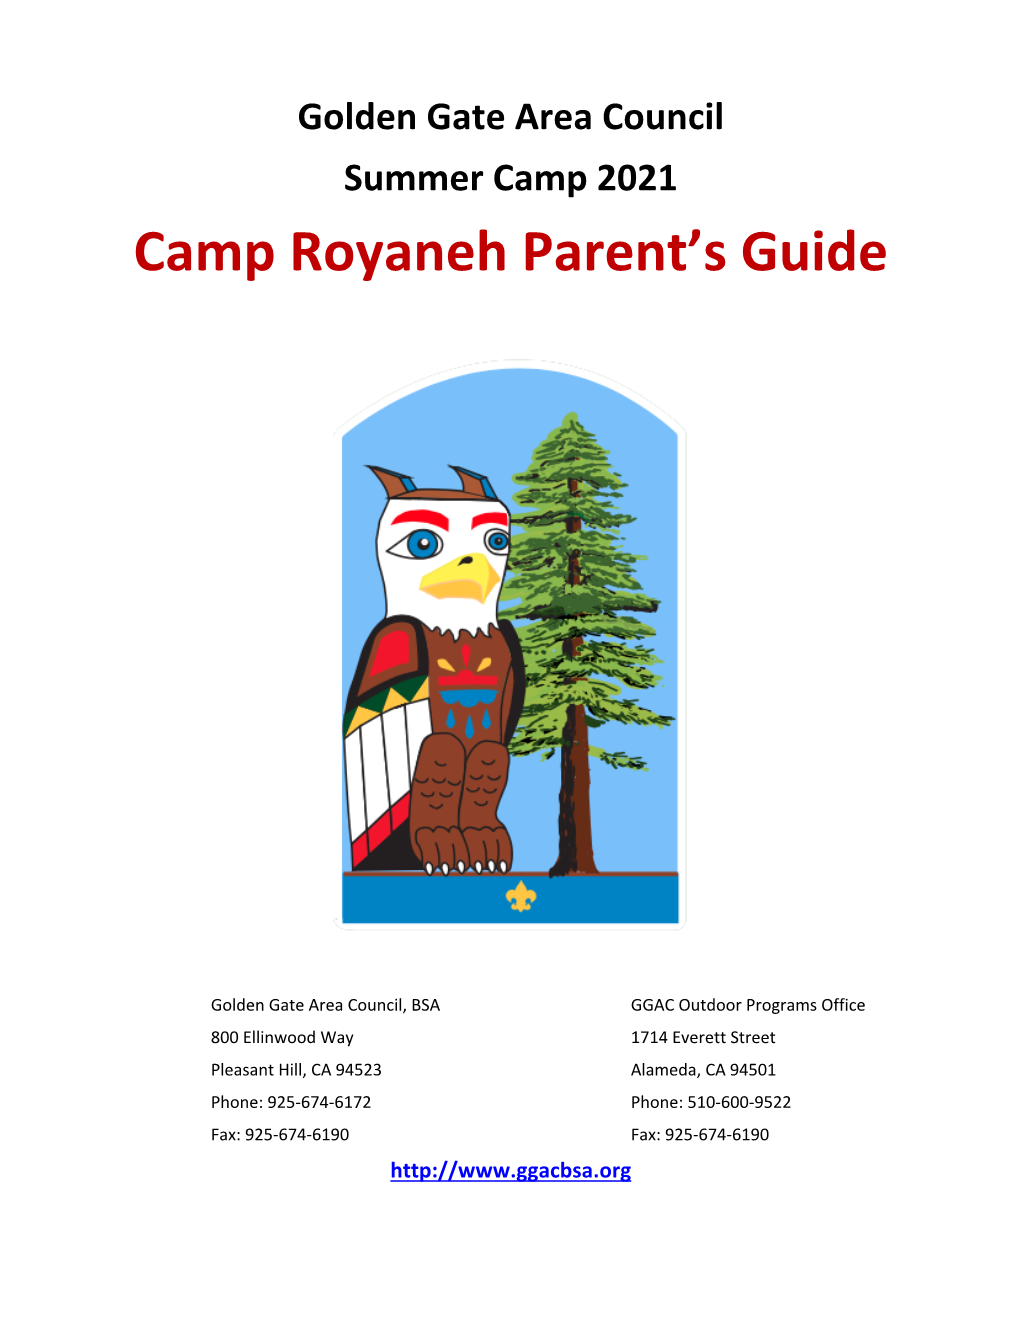 Camp Royaneh Parent's Guide